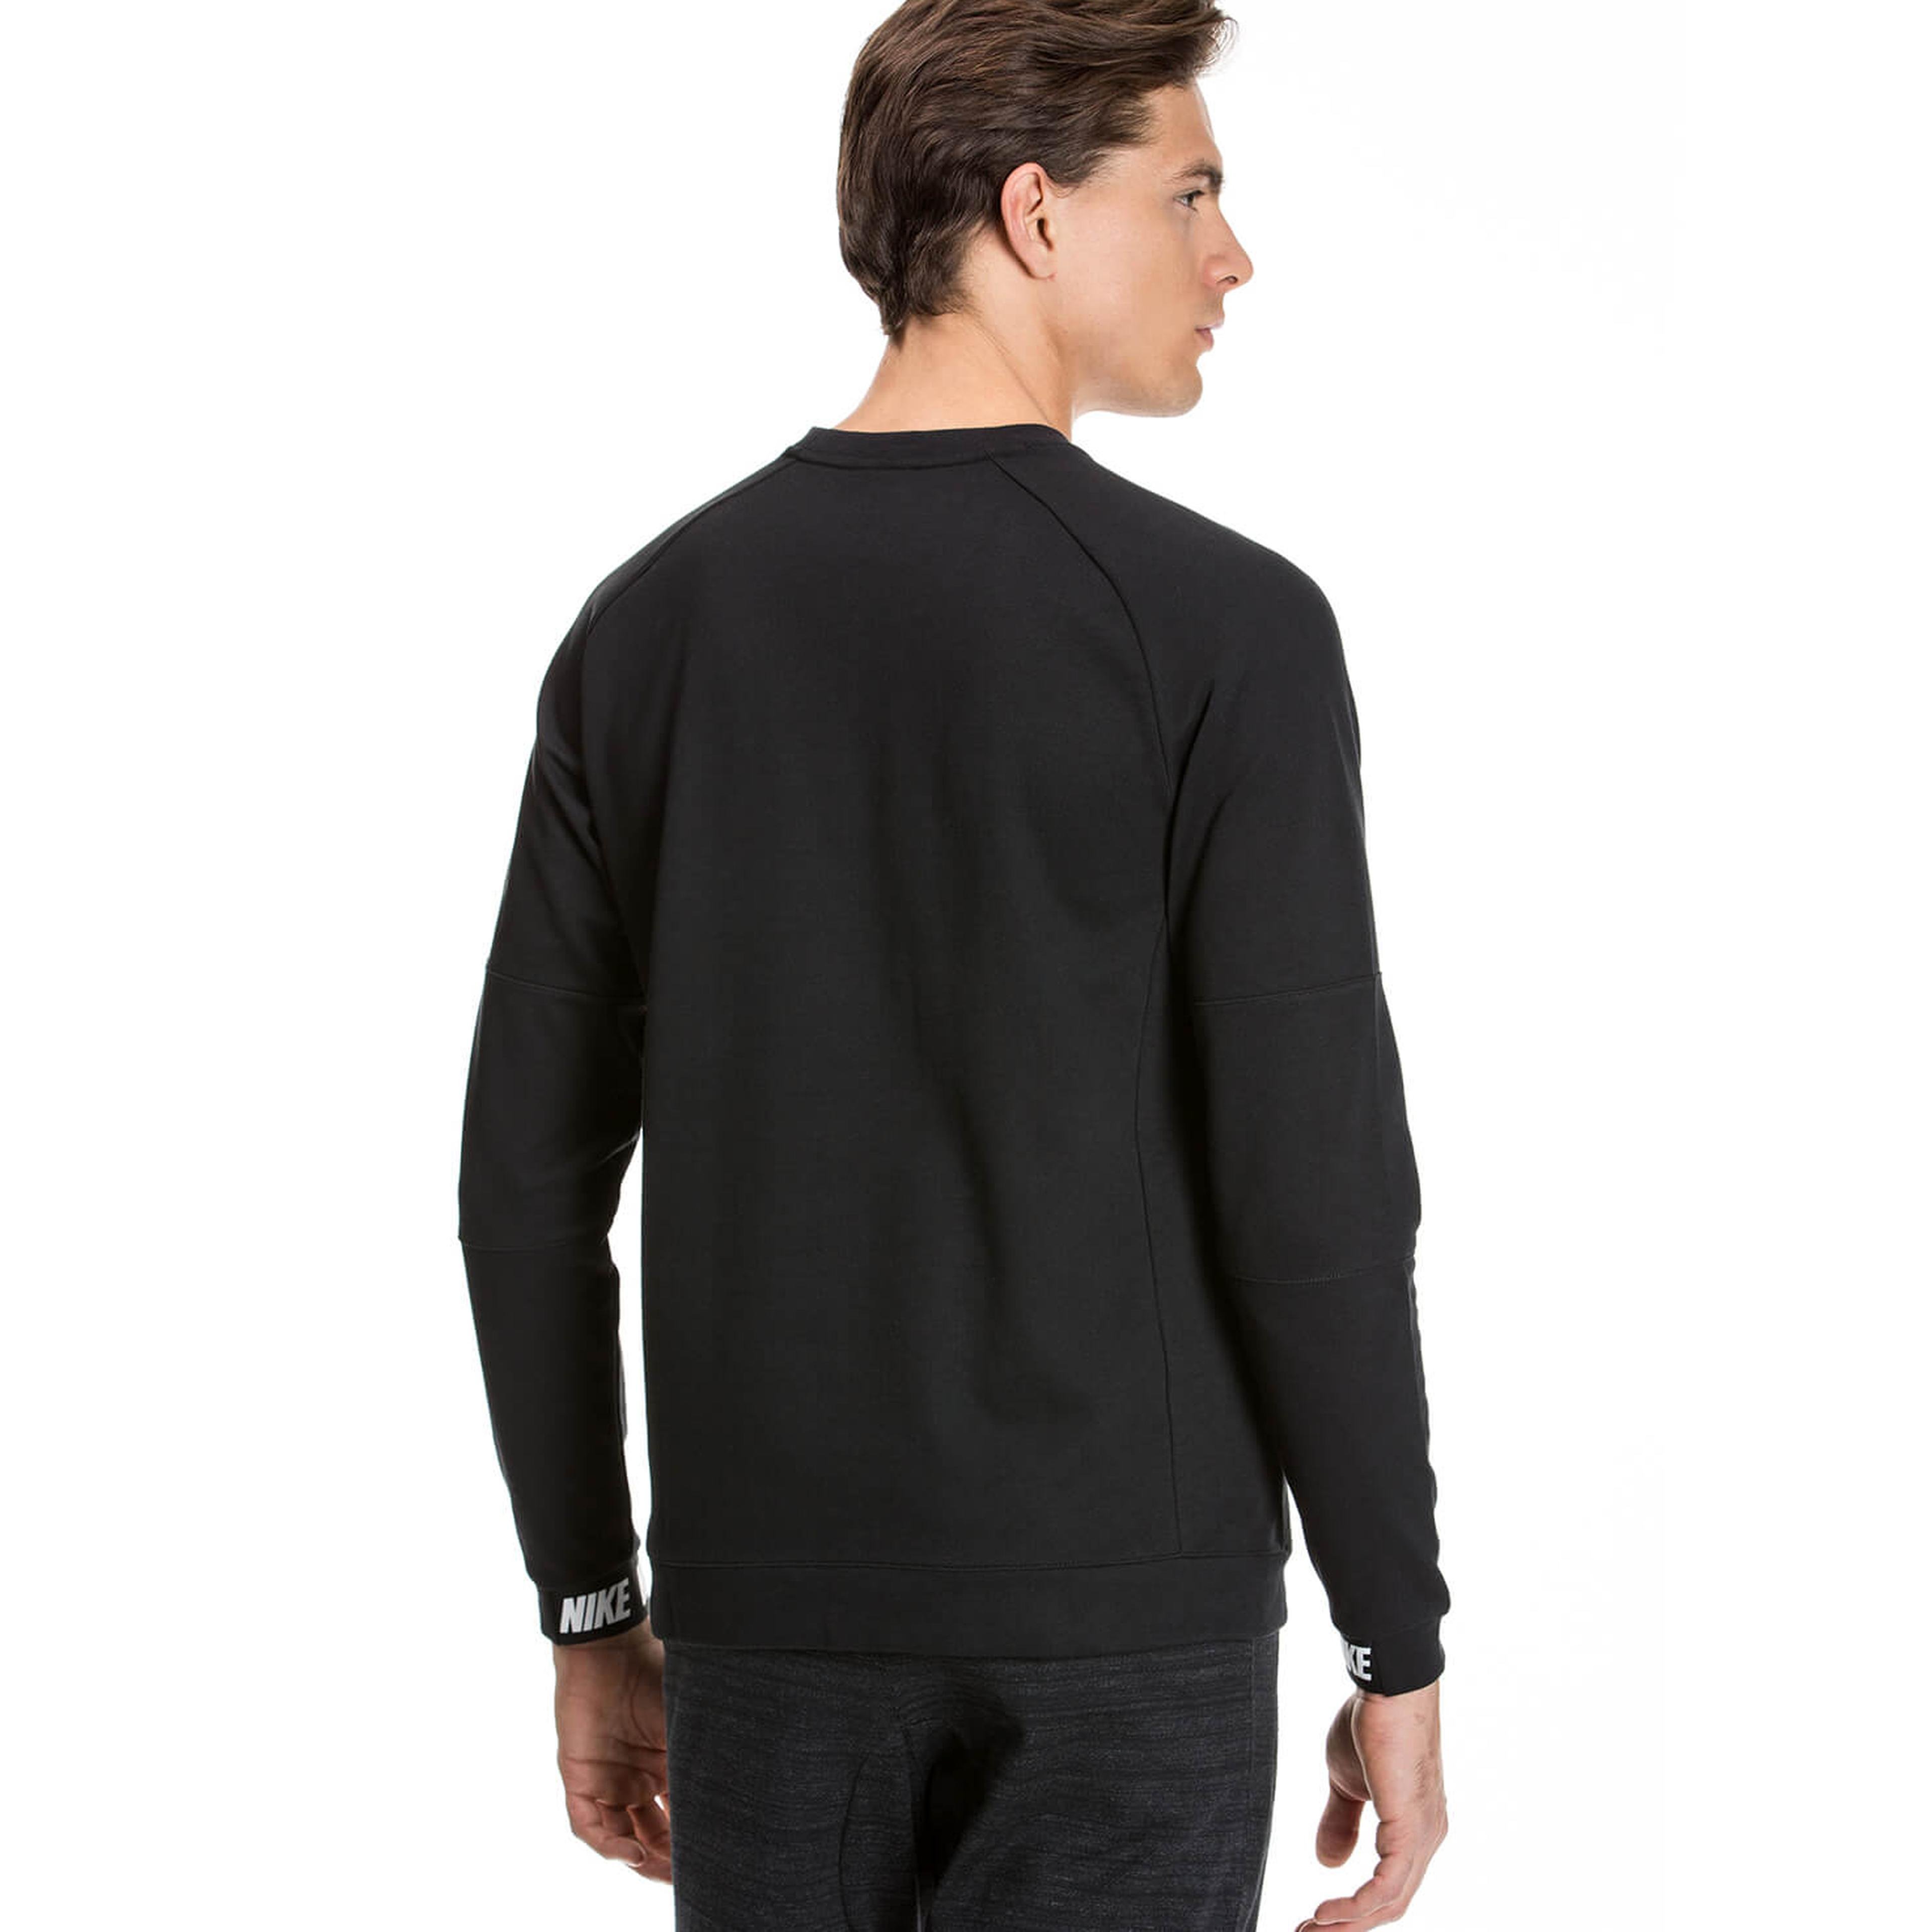 Nike Av15 Crw Flc Erkek Siyah Sweatshirt